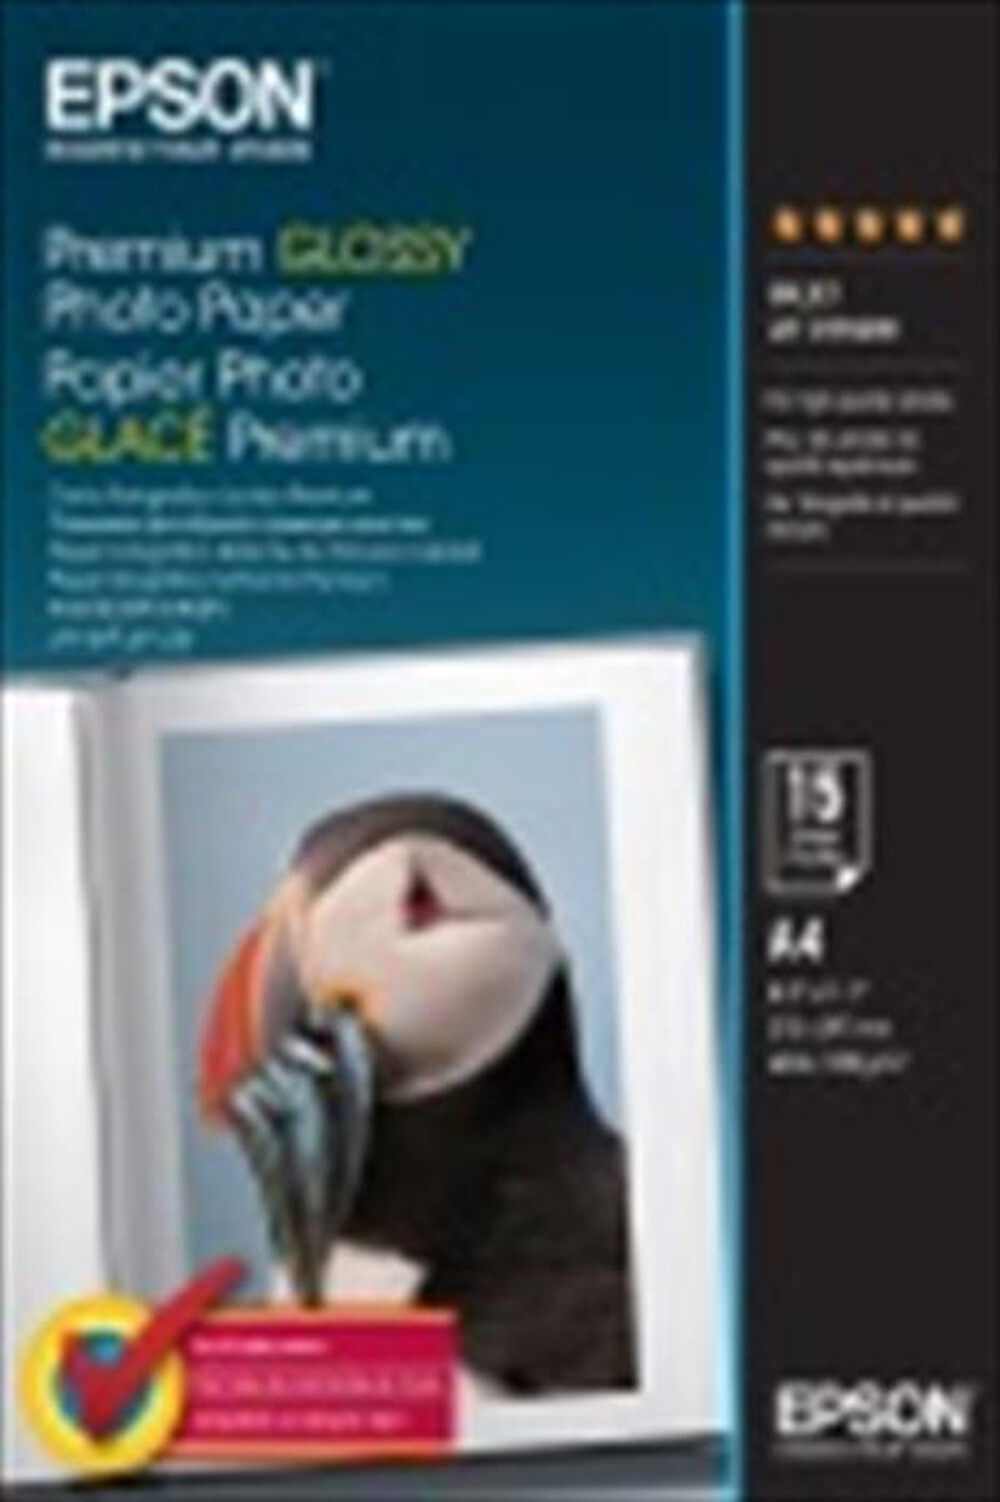 "EPSON - Carta fotografica Premium Glossy Photo 15 fogli-Lucida"